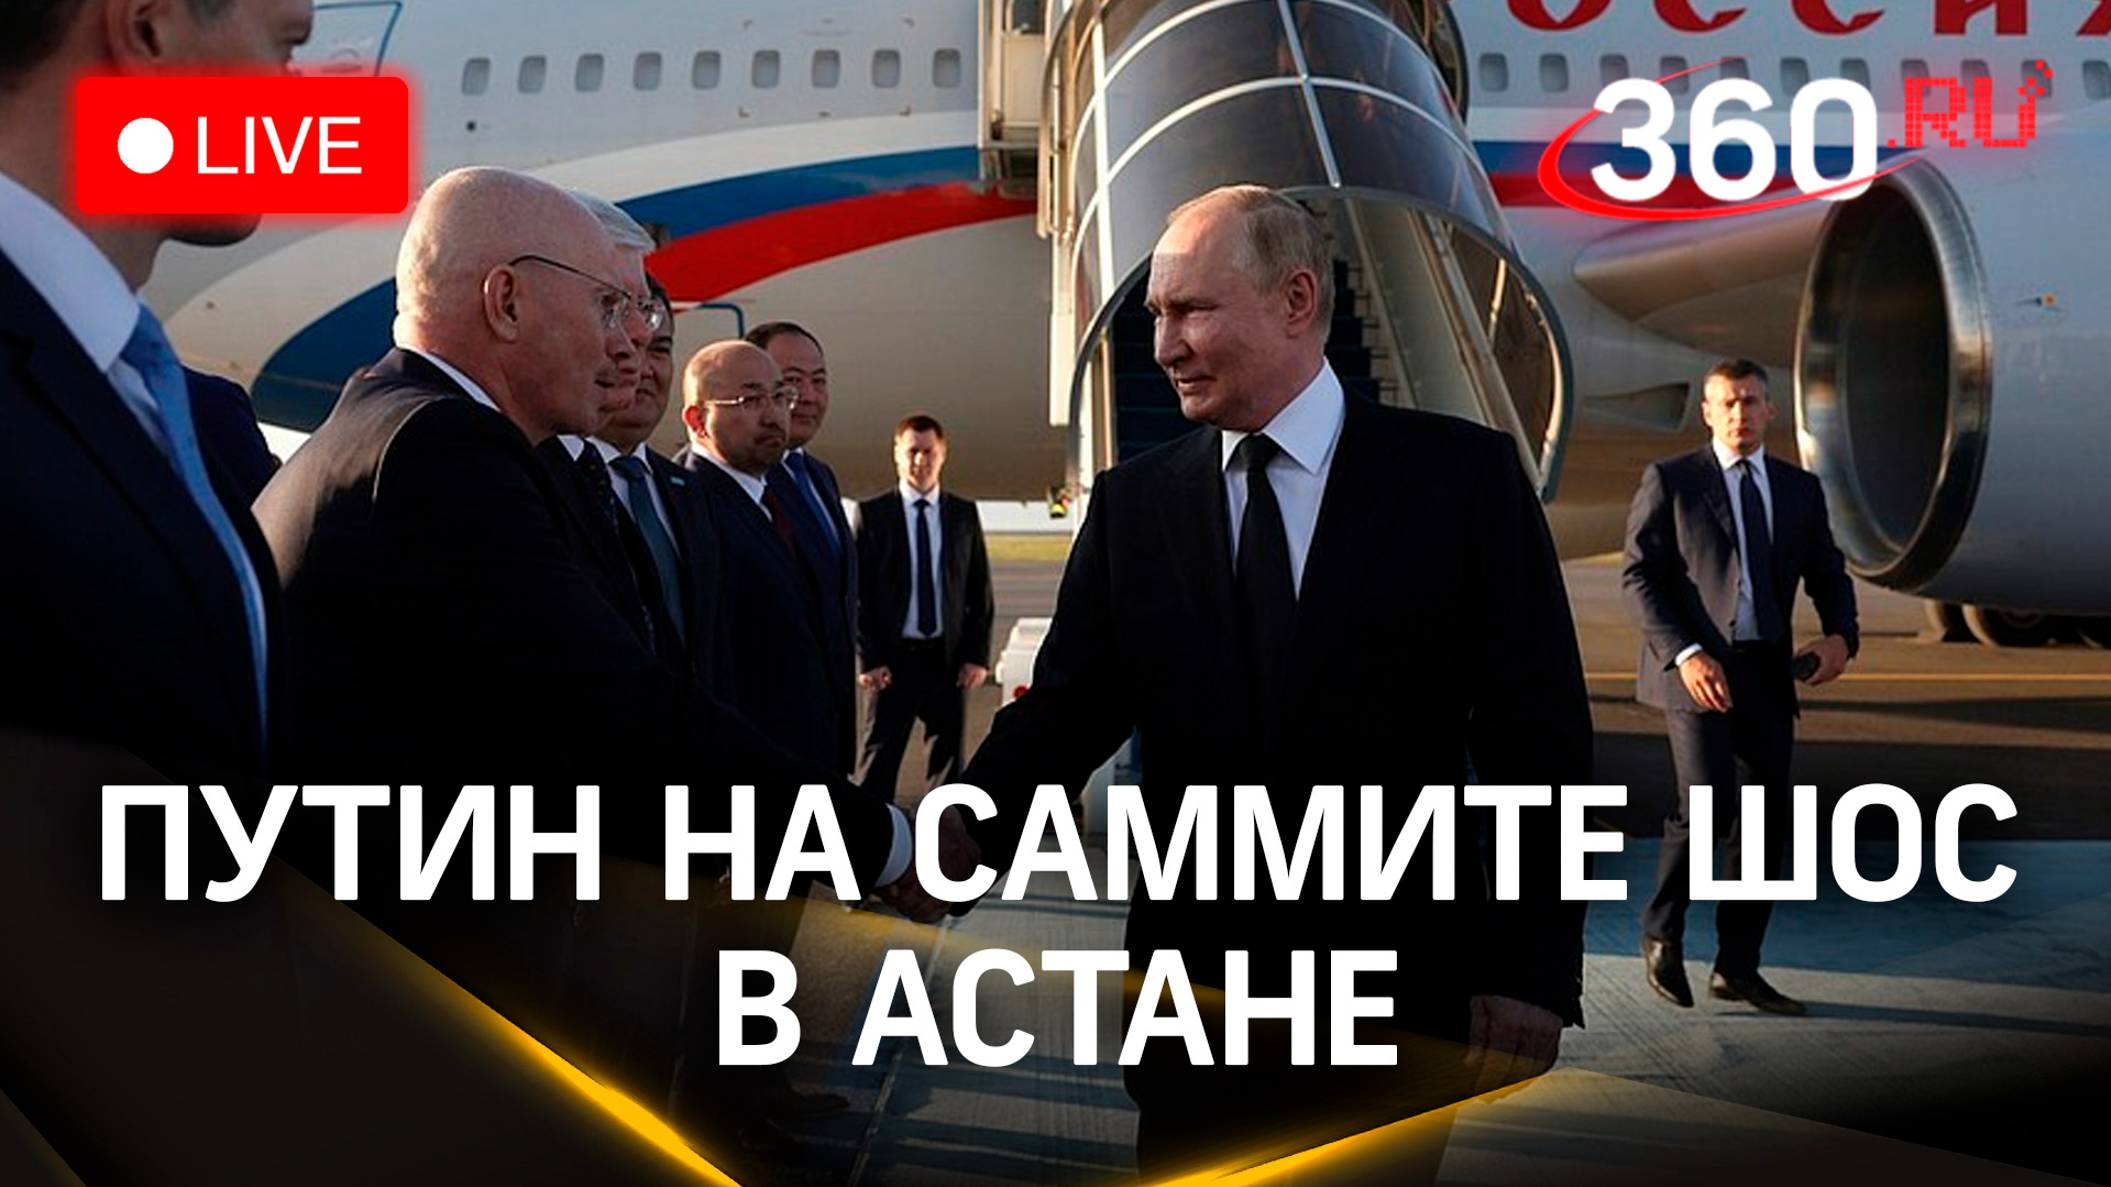 Путин на саммите ШОС. Встречи с главами государств